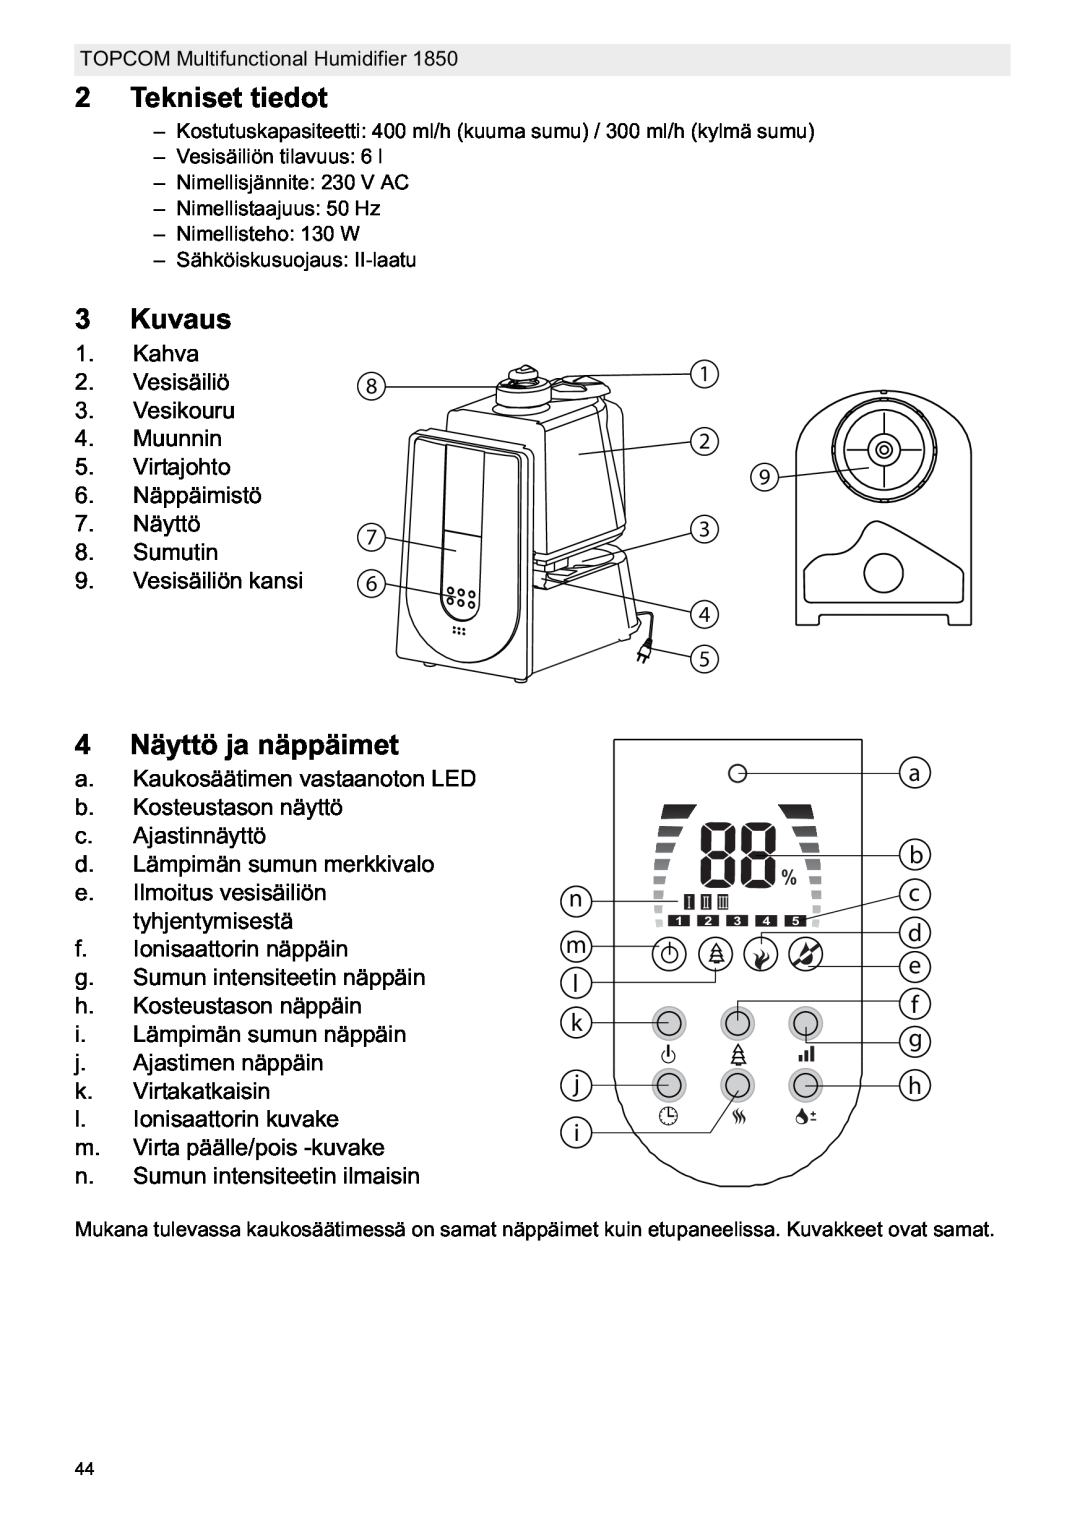 Topcom 1850 manual do utilizador Tekniset tiedot, Kuvaus, 4 Näyttö ja näppäimet 